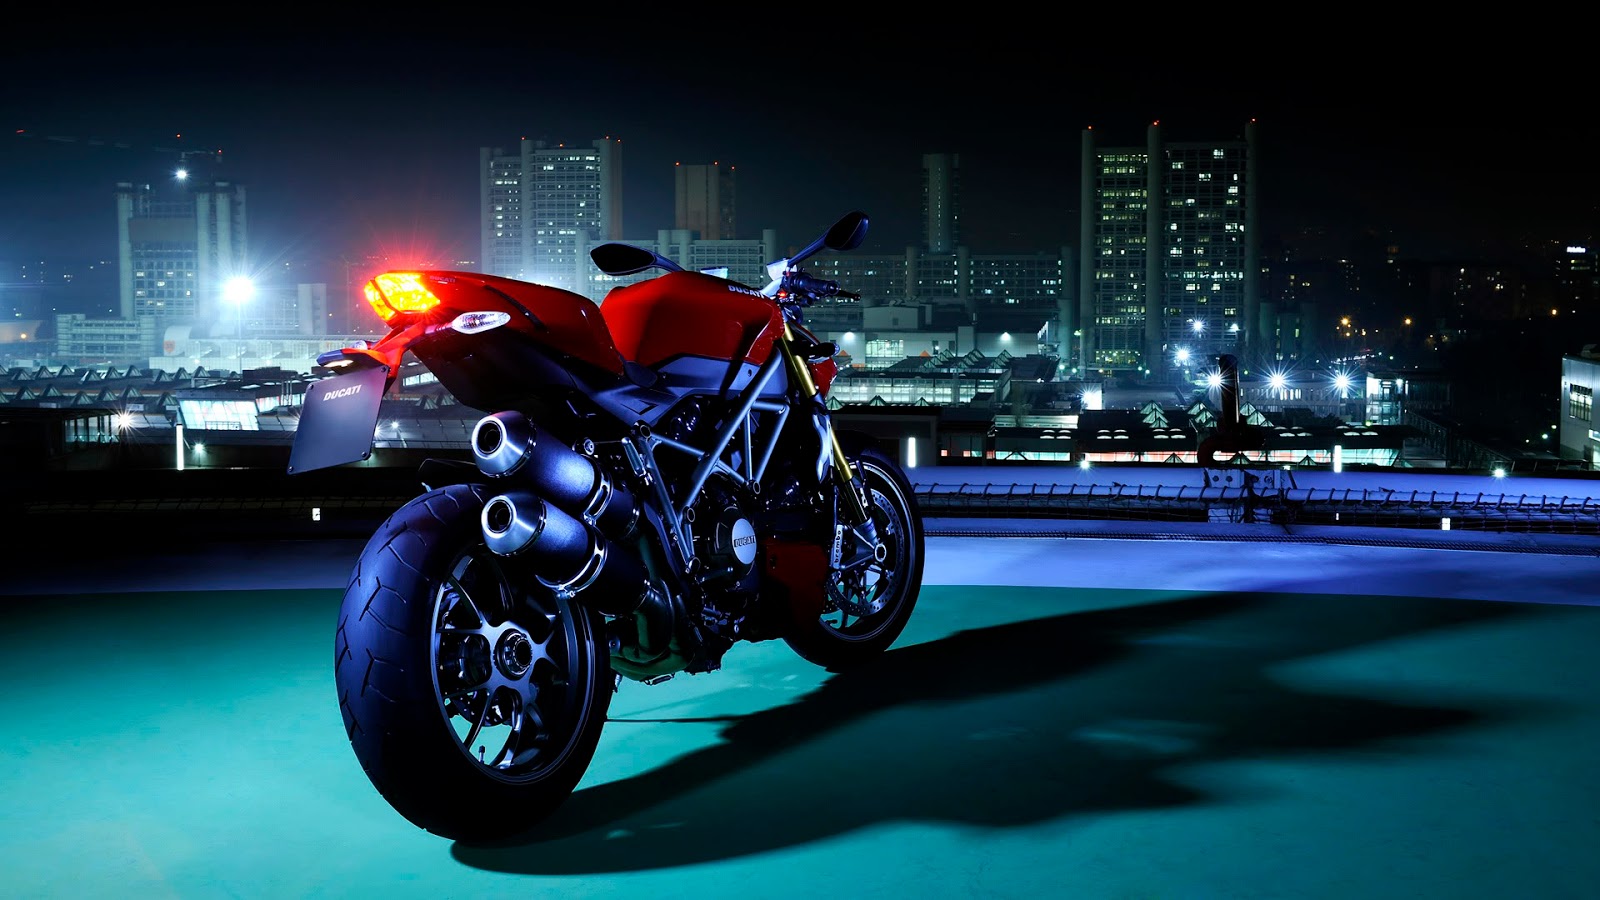 New Full HD 1080p Ducati Wallpaper Desktop Background Image